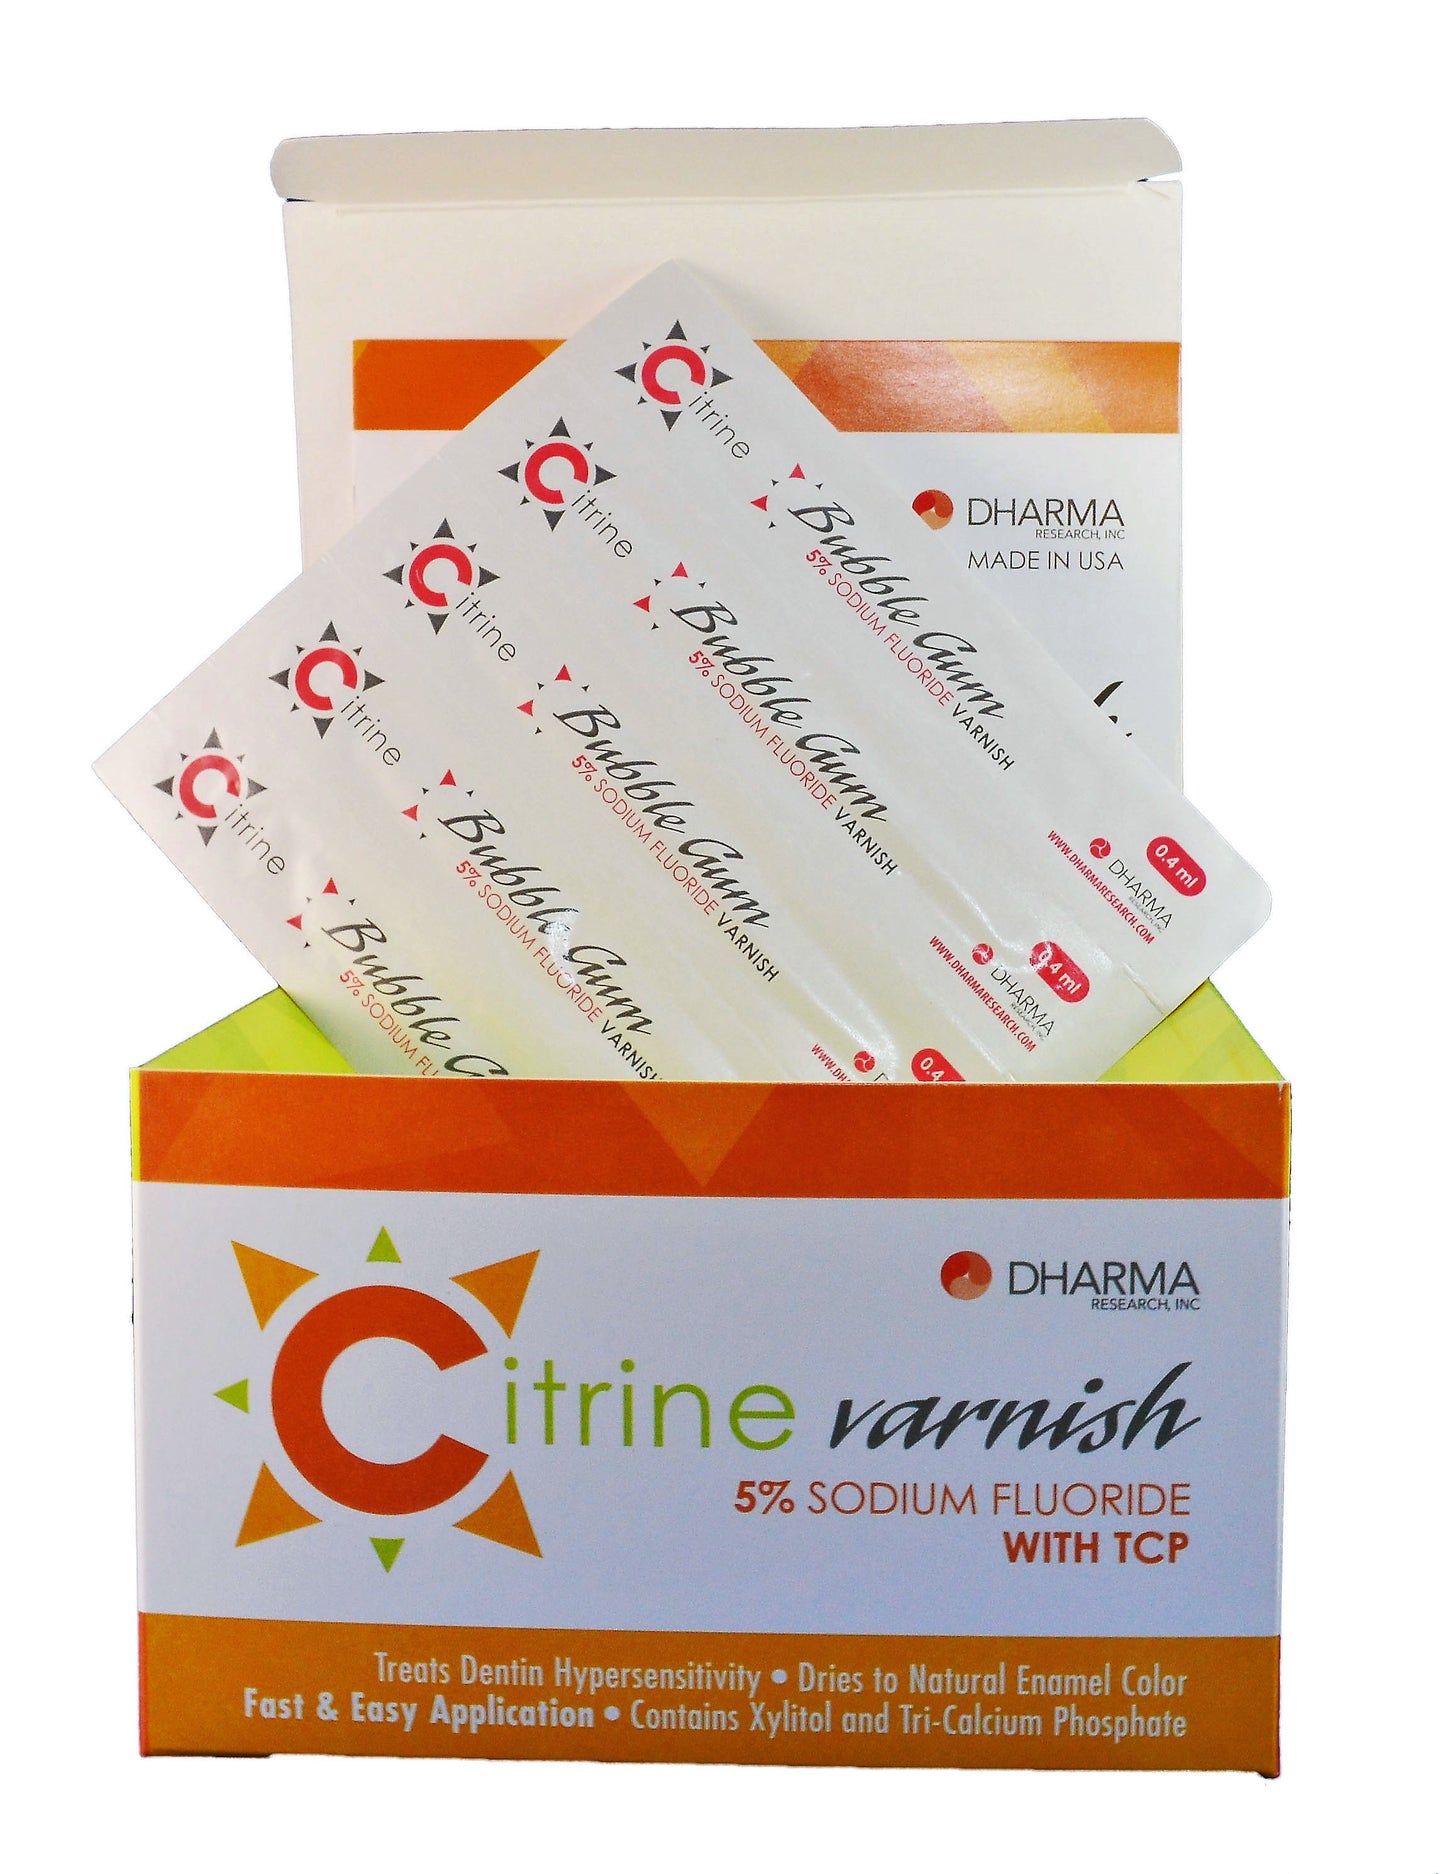 Citrine Varnish 5% Sodium Fluoride With TCP